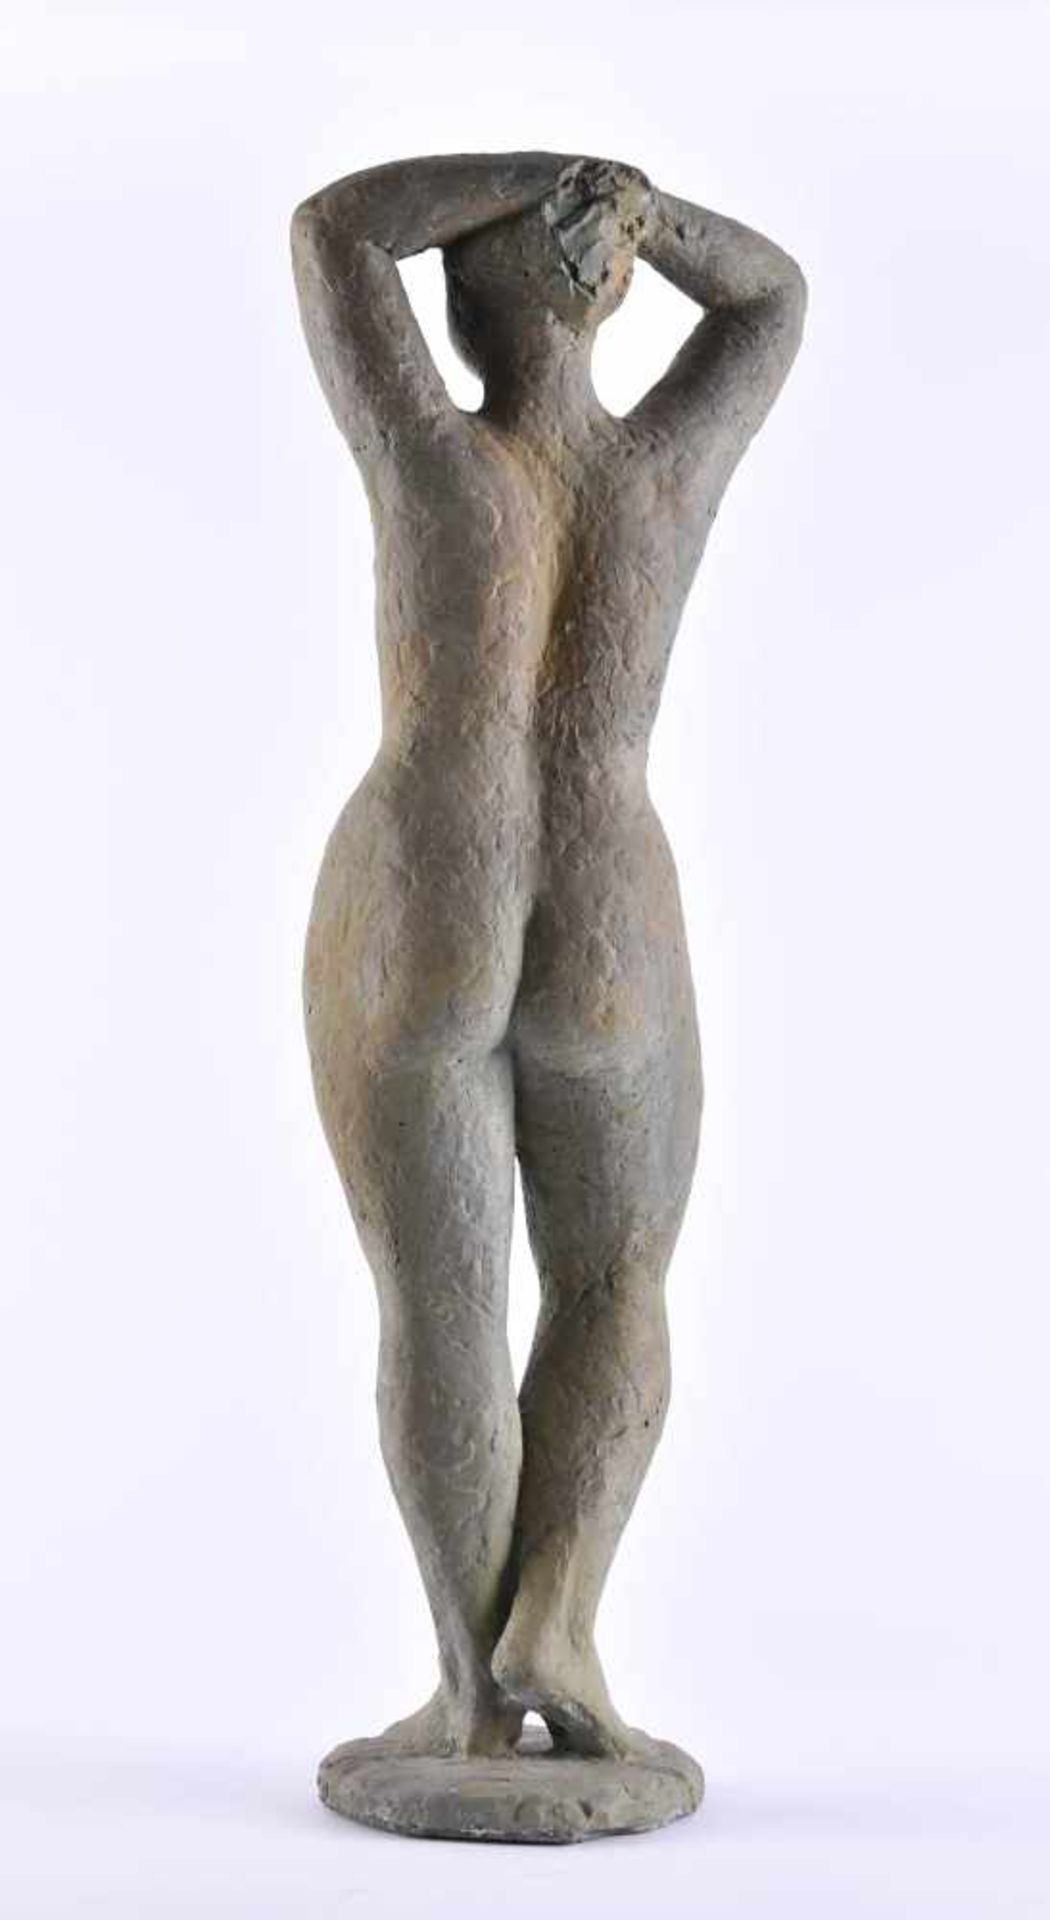 Rolf WINKLER (1930-2001)"Stehende"sculpture - stone casting, height: 60 cm,monogrammed on the - Image 4 of 5